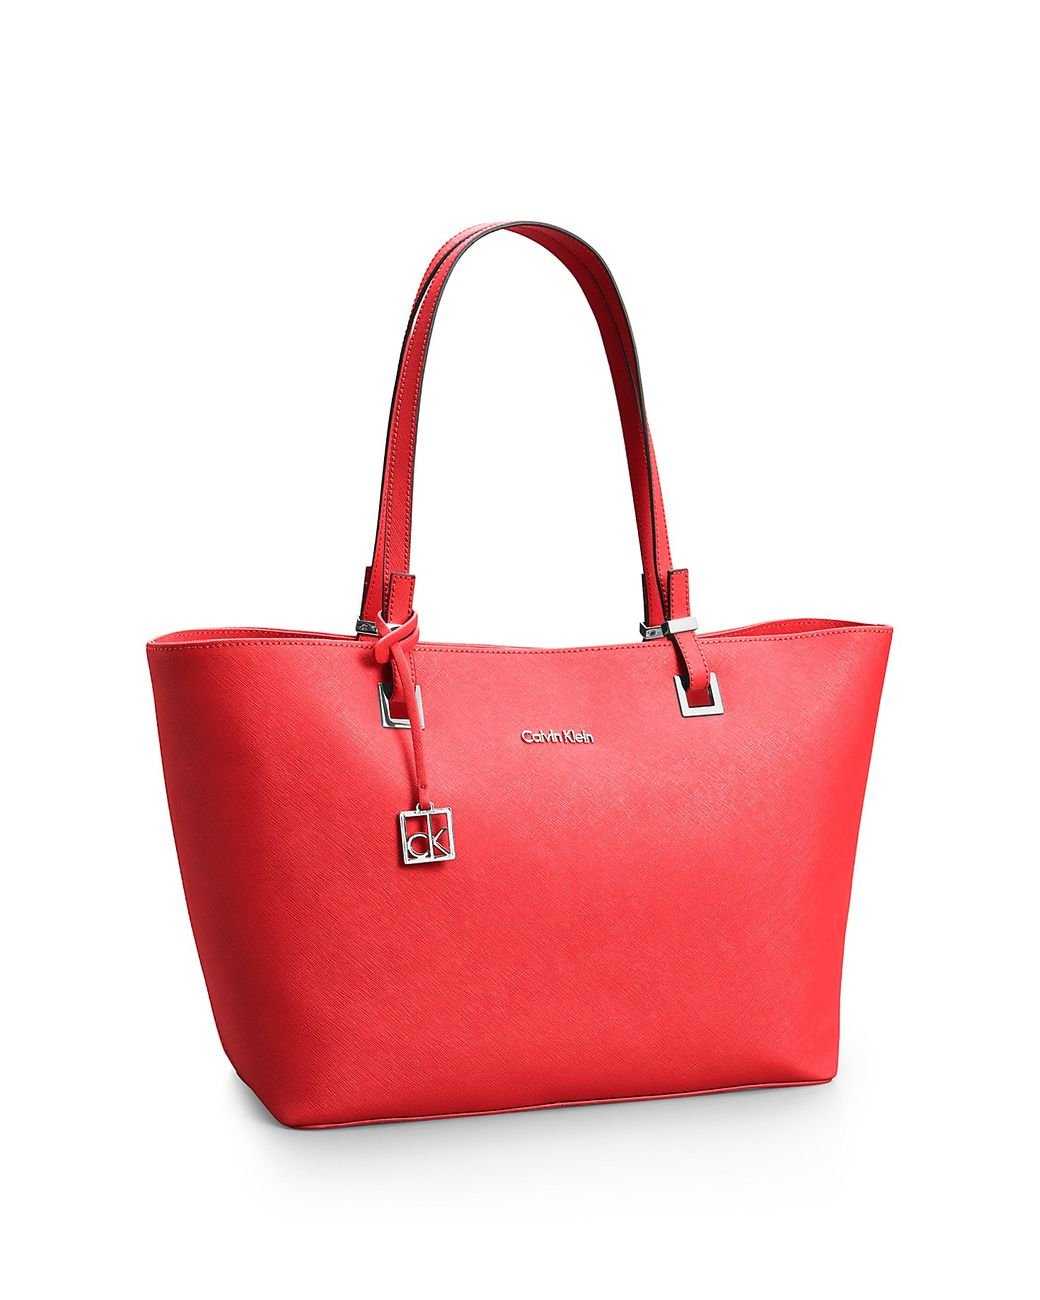 Calvin Klein Scarlett Saffiano Leather Shopper Tote in Cerise (Red) | Lyst